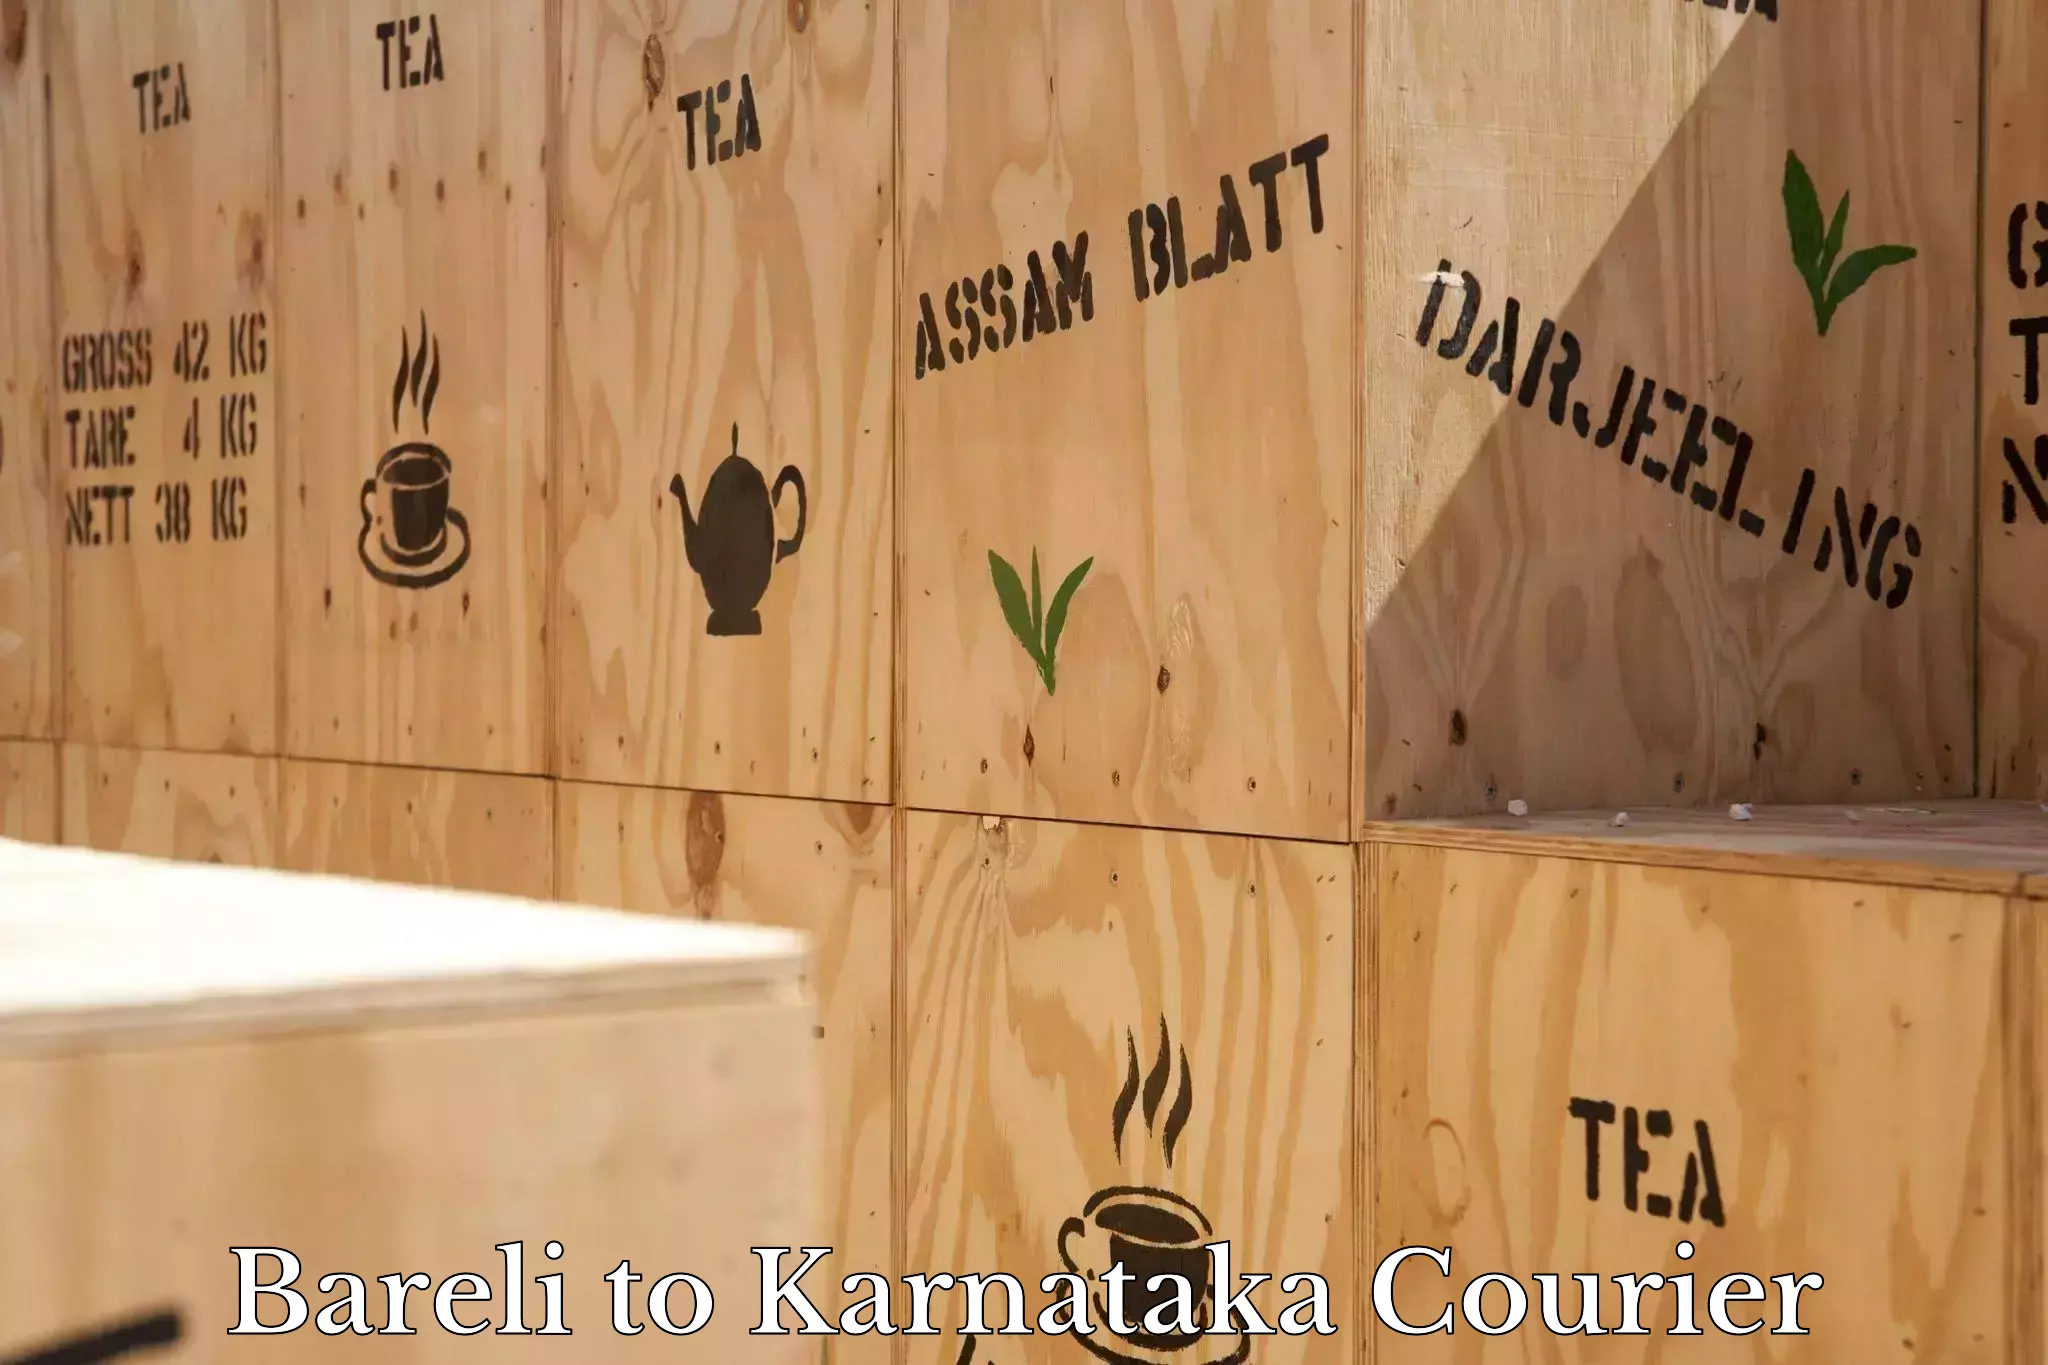 Personal effects shipping in Bareli to Karnataka